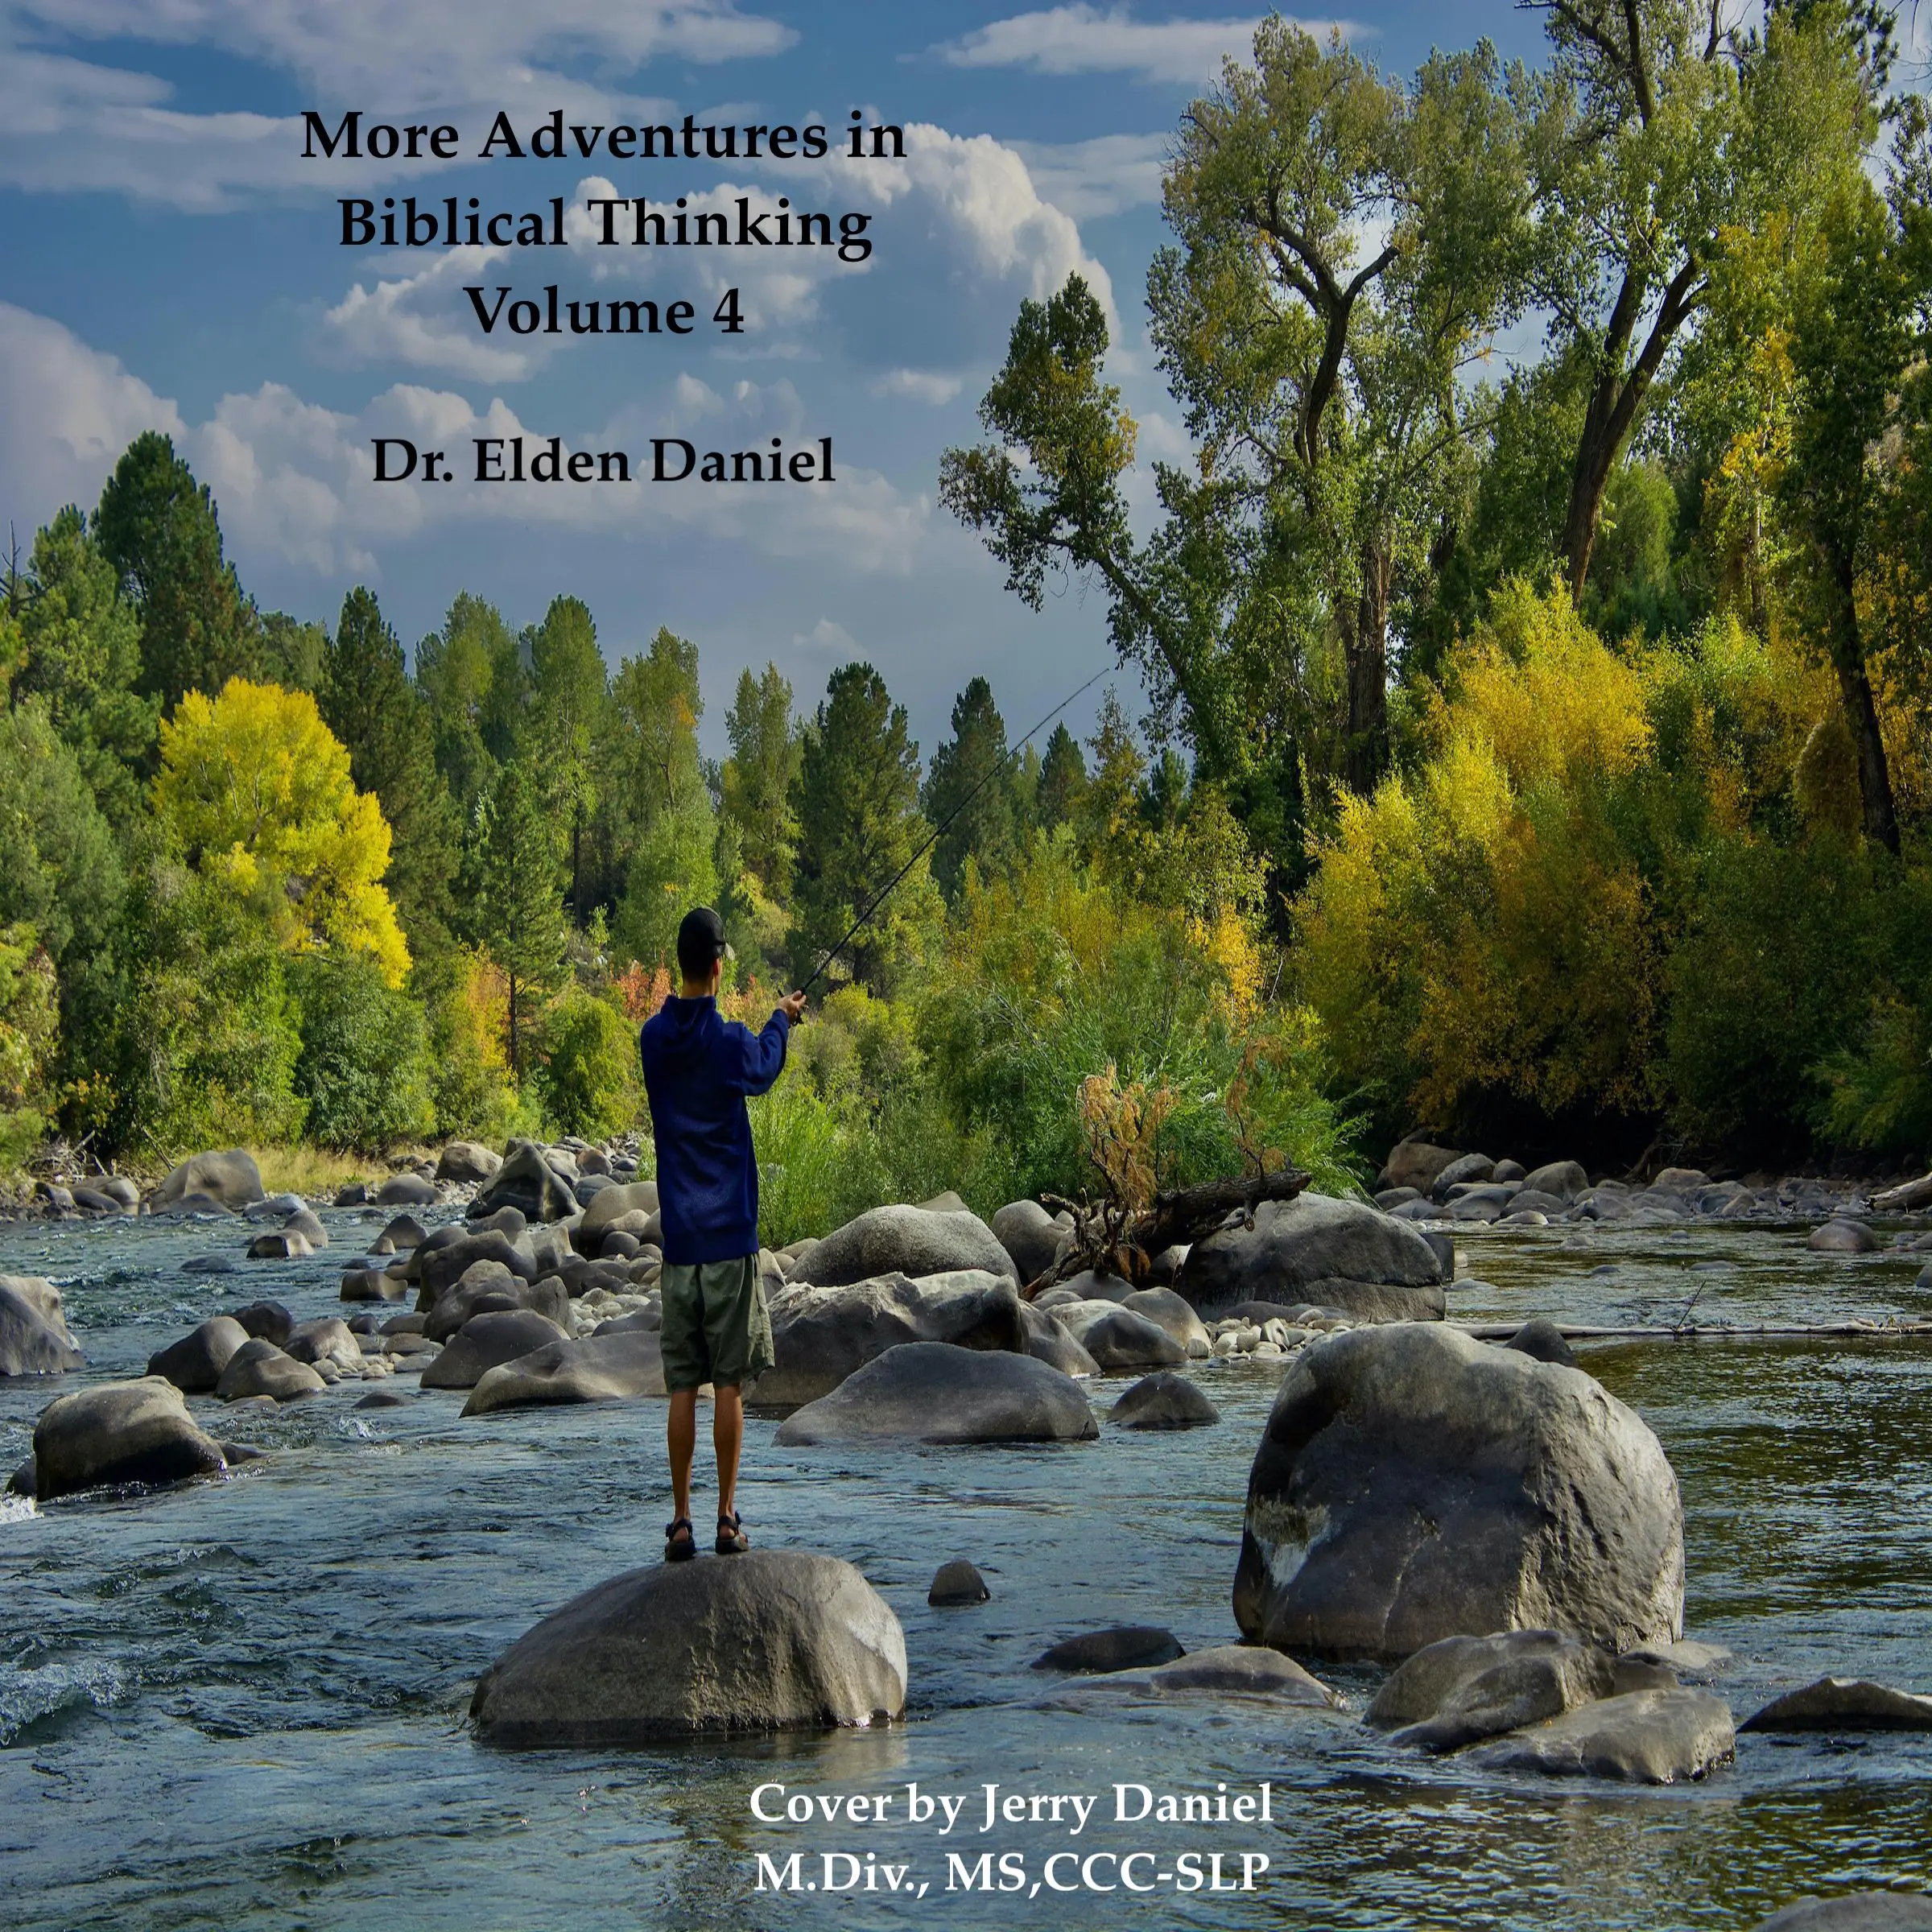 More Adventures in Biblical Thinking - Volume 4 by Dr. Elden Daniel Audiobook